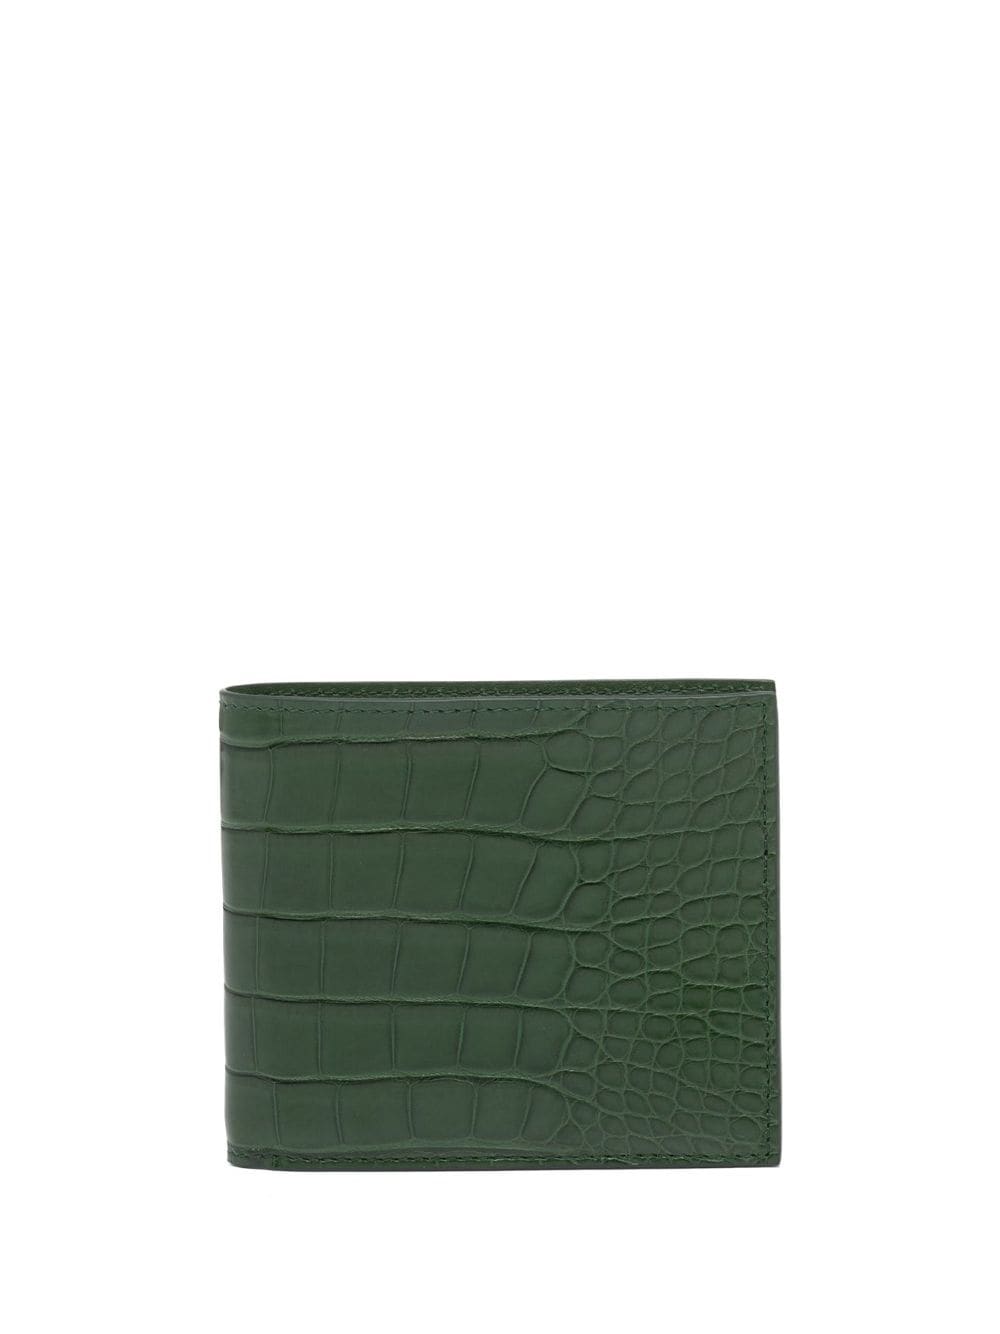 Prada Croco-effect Leather Wallet In Green